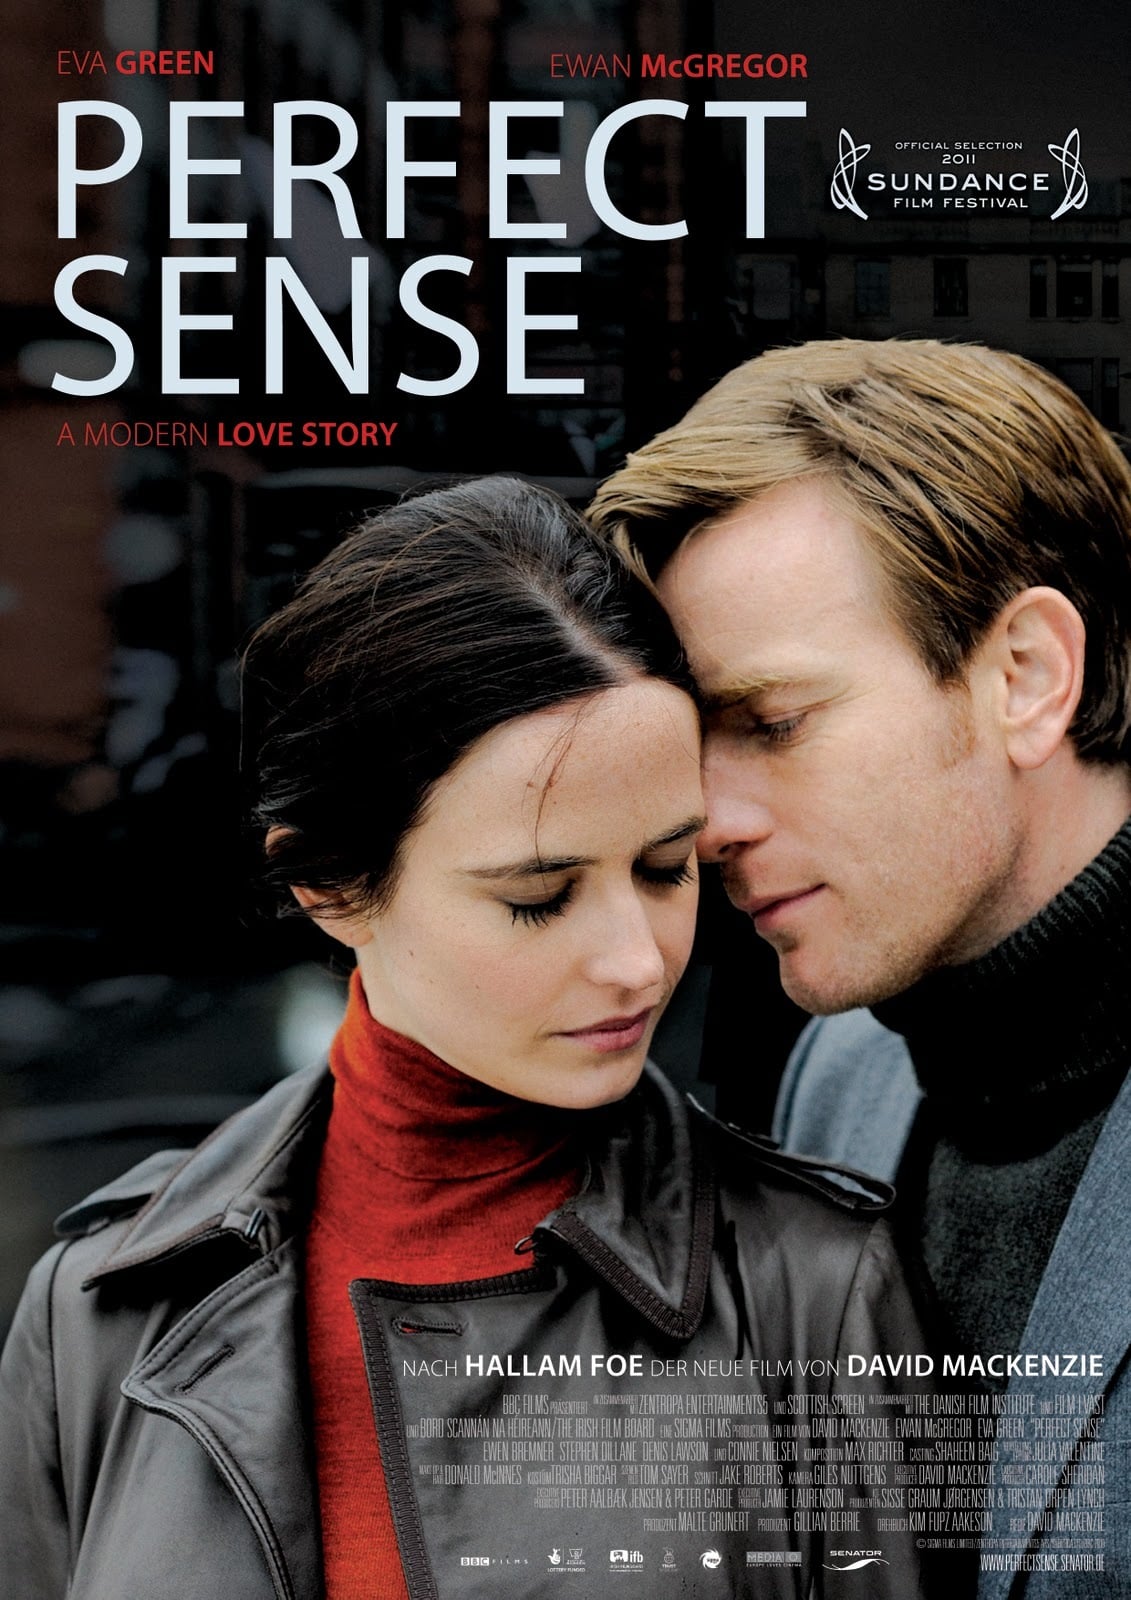 Plakat von "Perfect Sense"